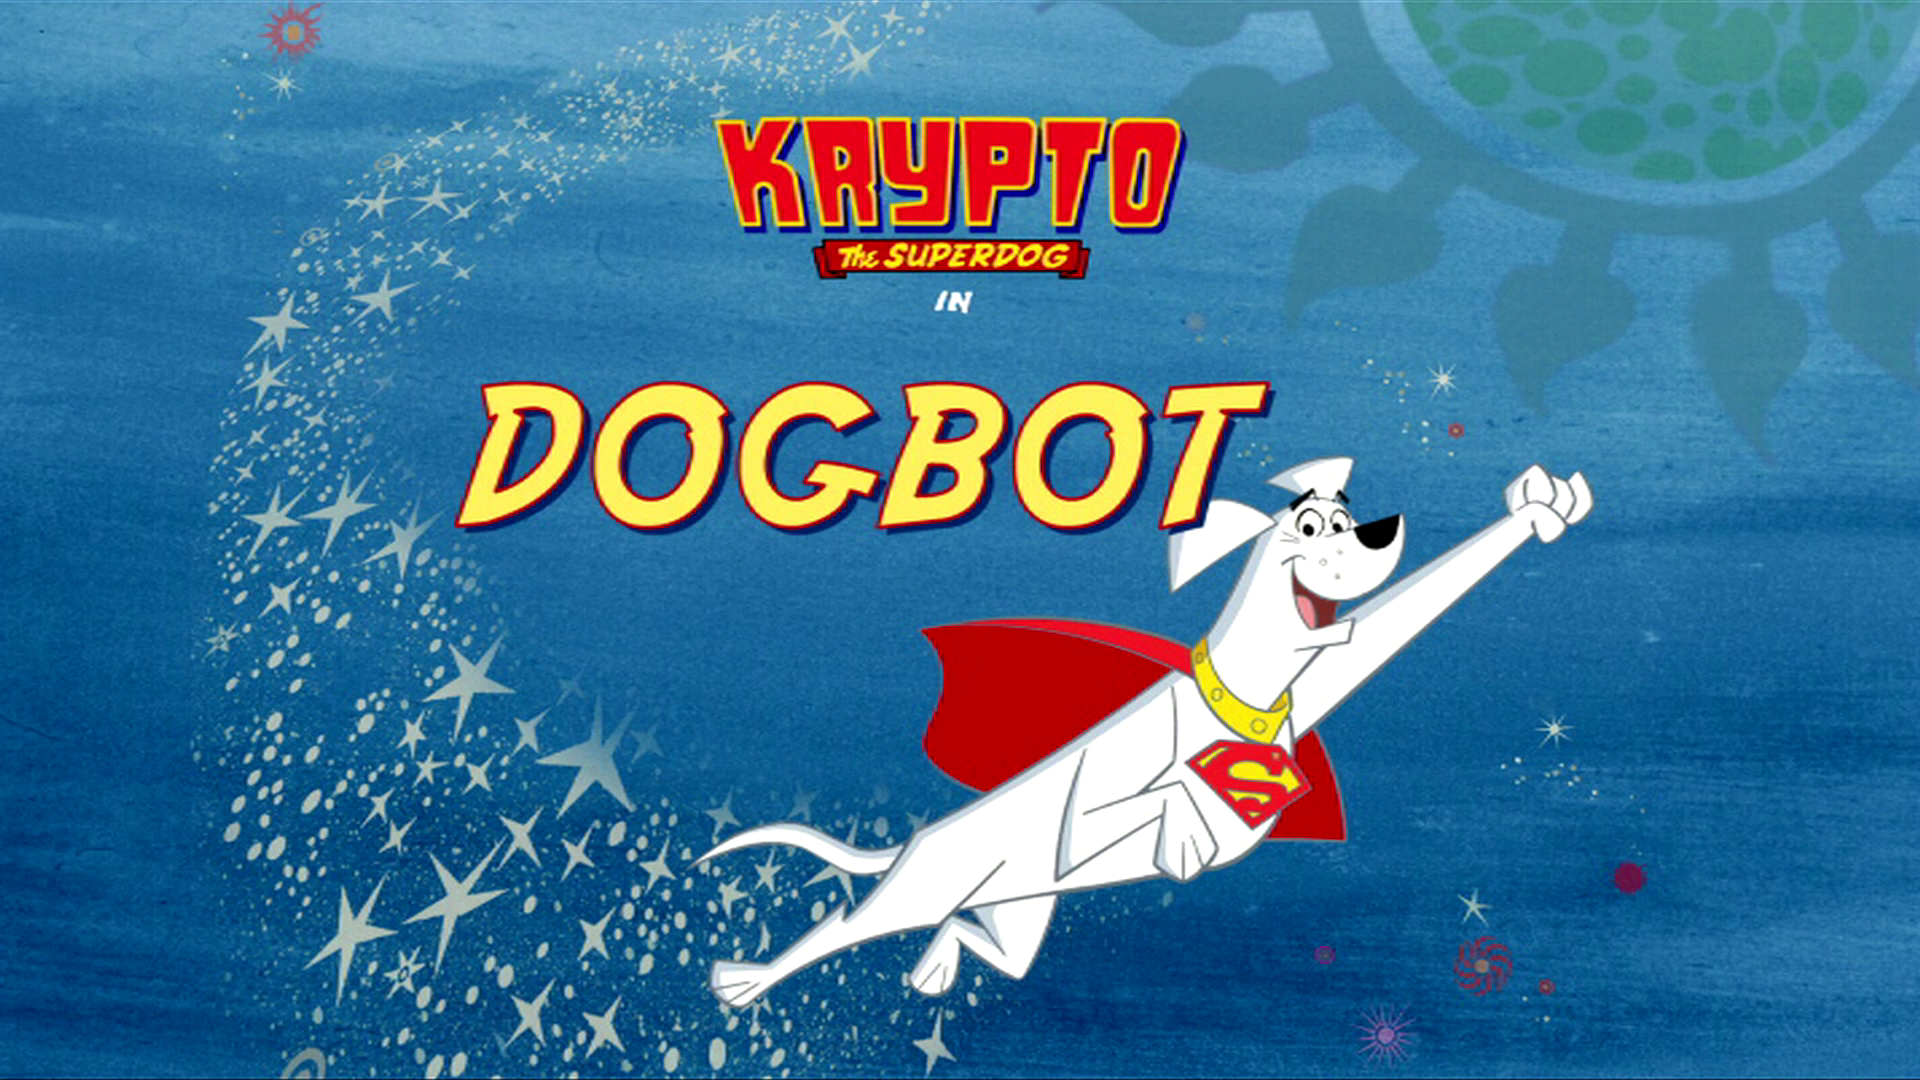 Dogbot | Krypto the Wiki | Fandom